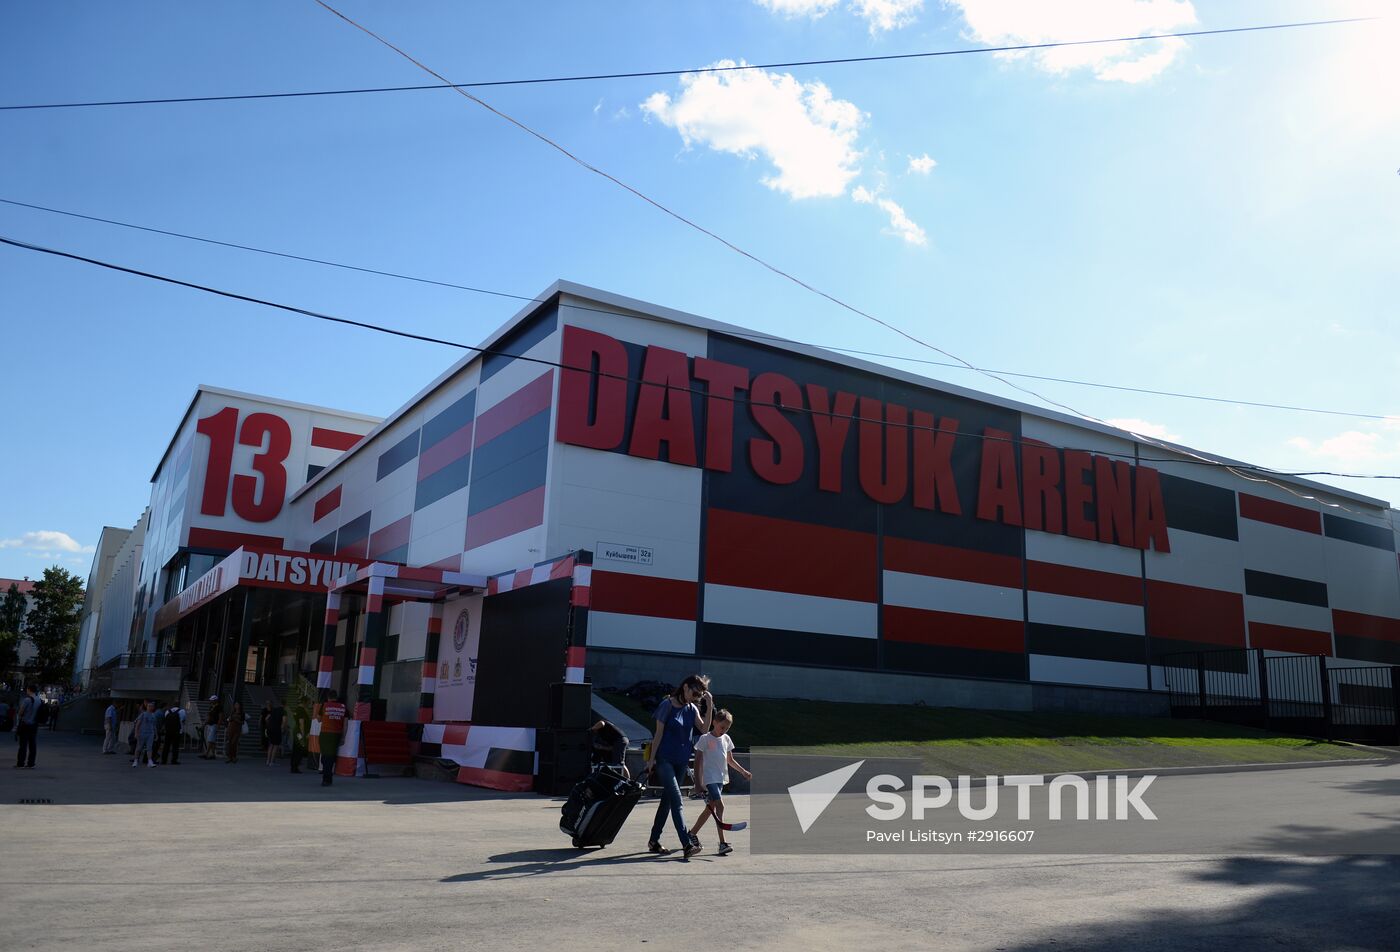 Datsyuk Arena opens in Yekaterinburg